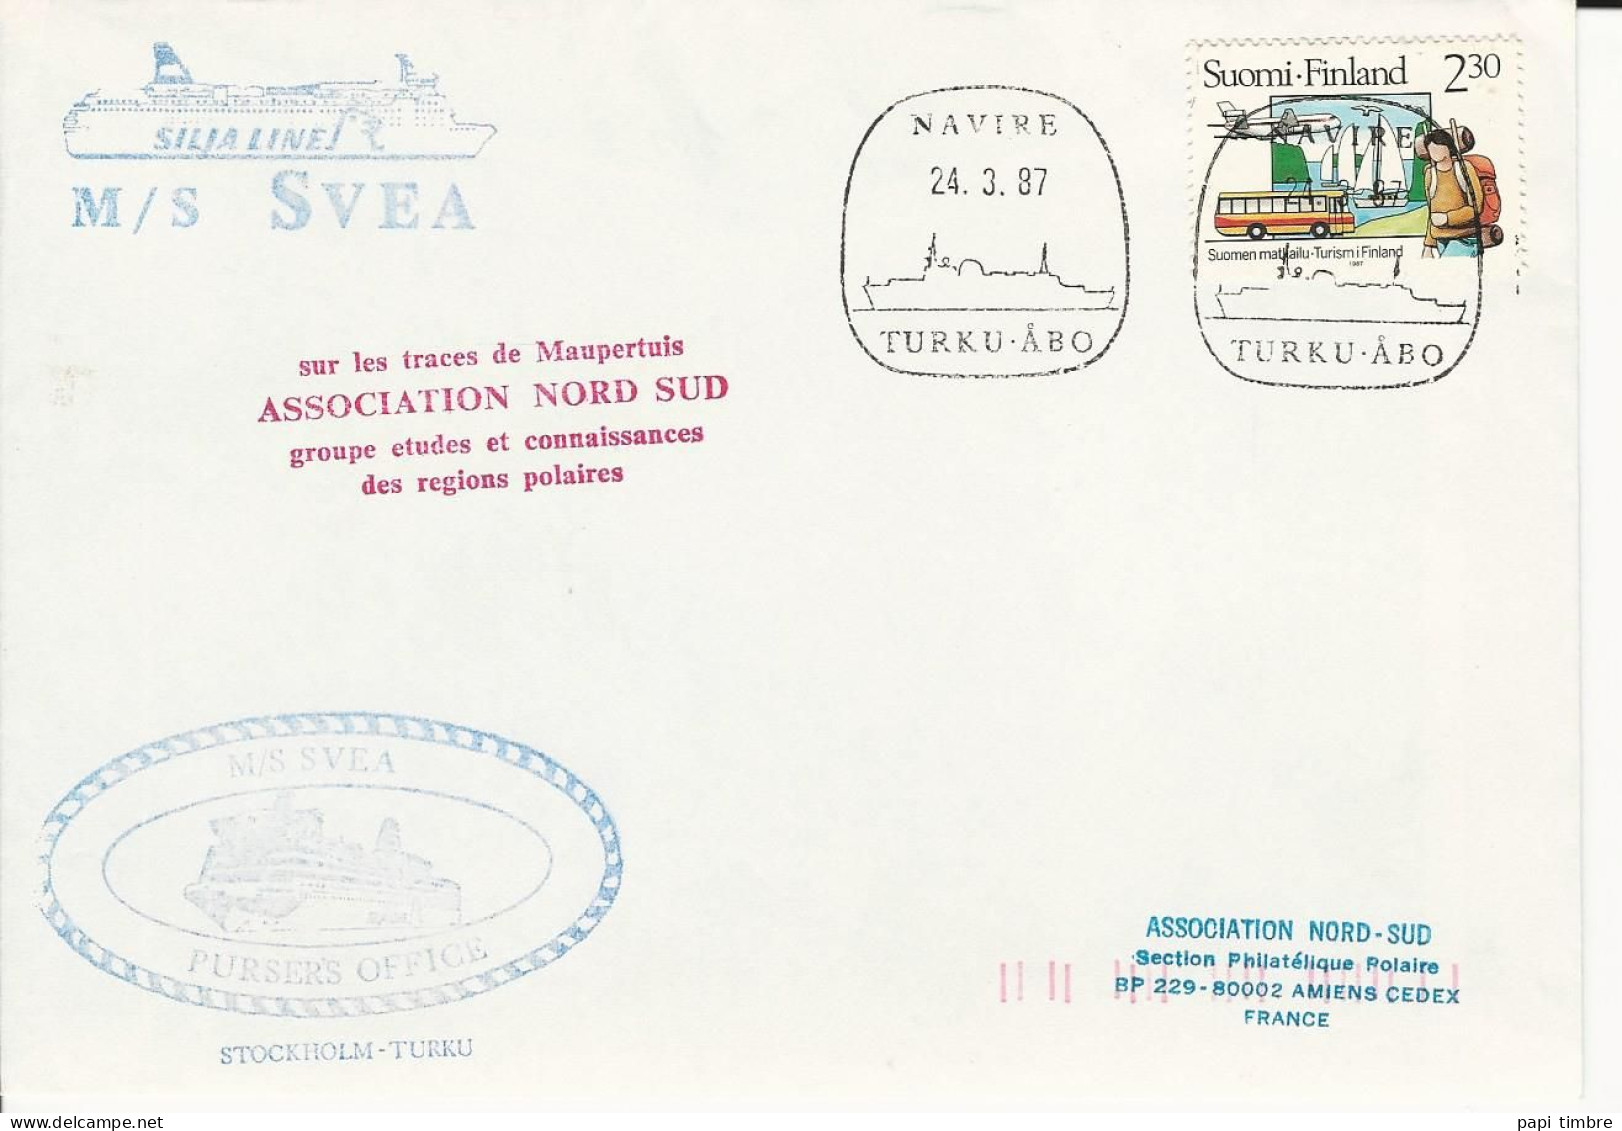 FINLANDE - Association Nord-Sud - M/S SVEA - Navire TURKU-ÂBO - 1987 - Programmi Di Ricerca